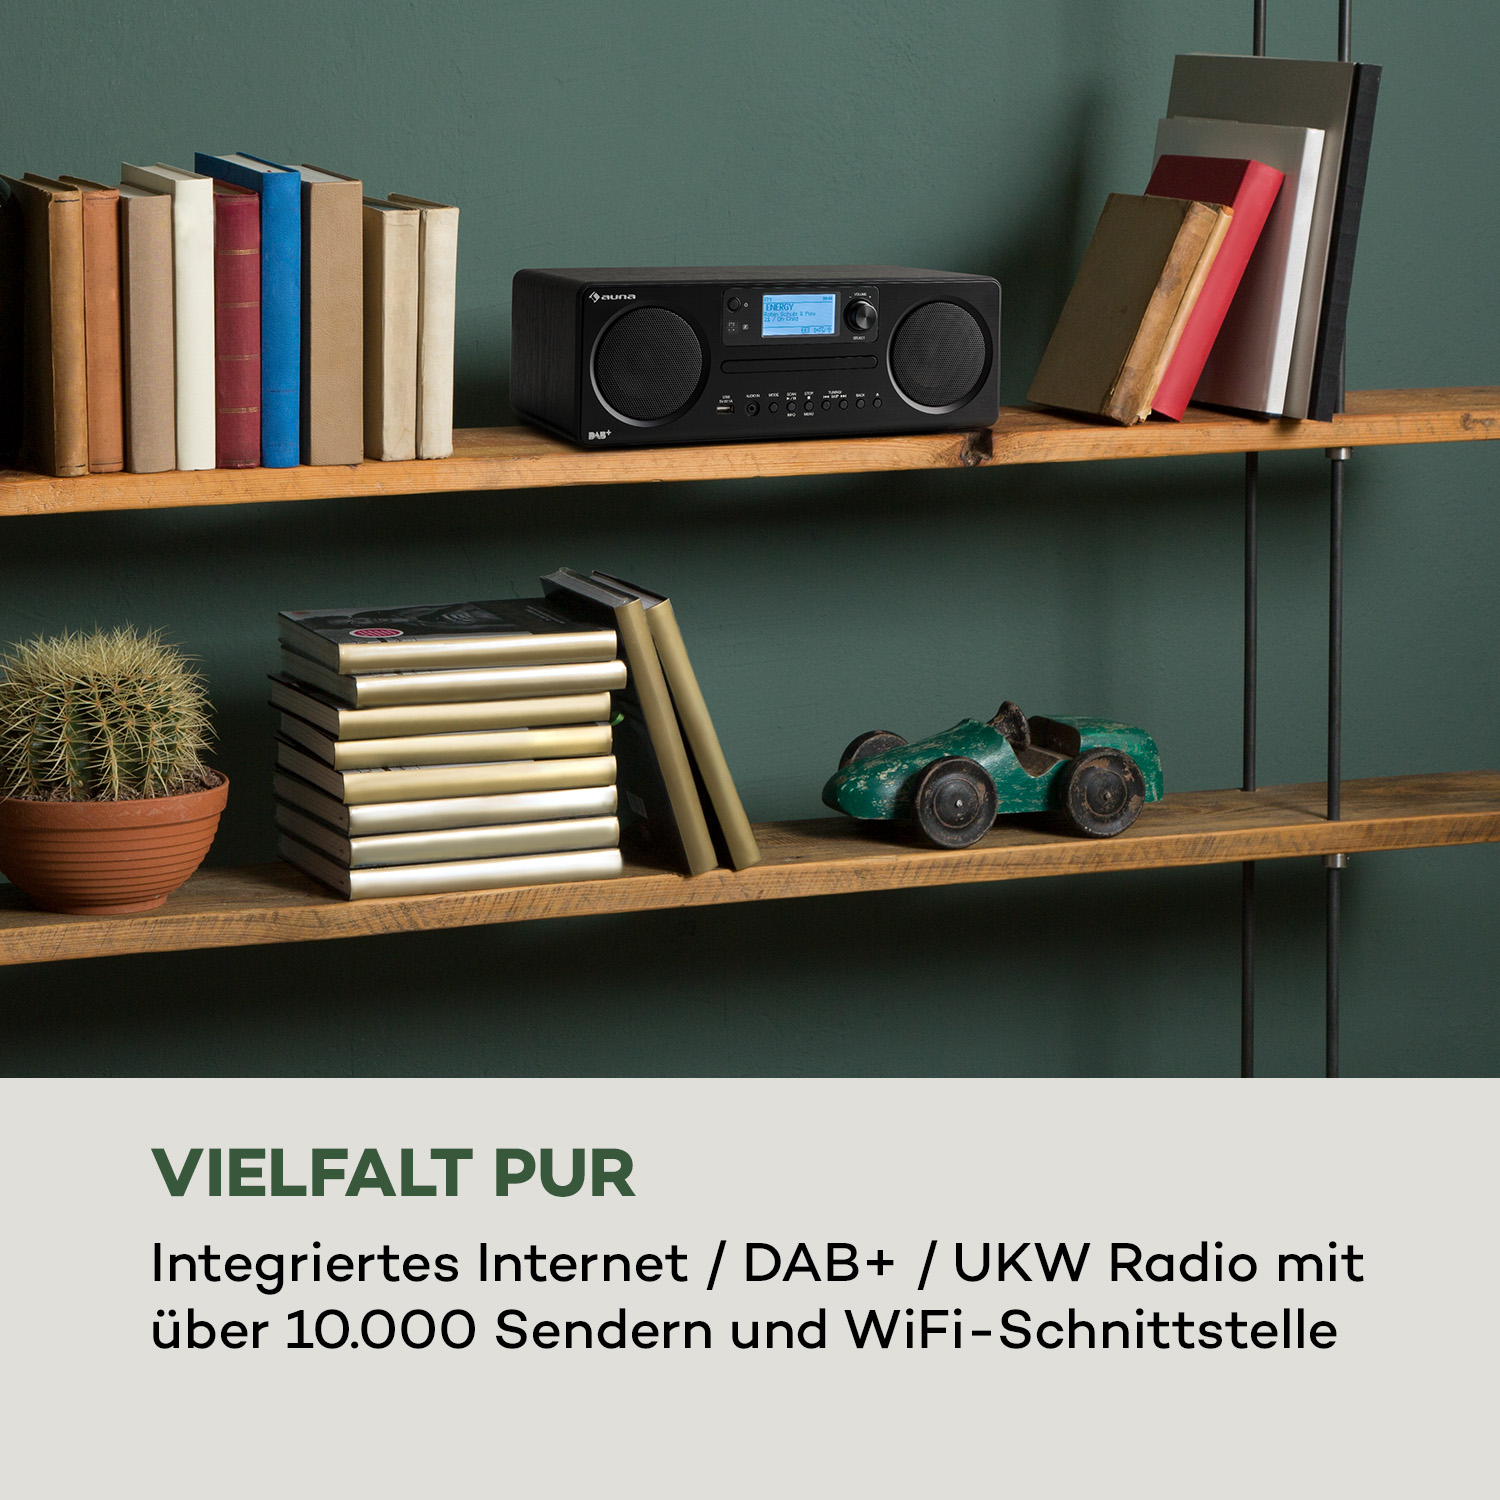 Bluetooth, Worldwide CD Radio, AUNA Schwarz Internet-Radio, Internet